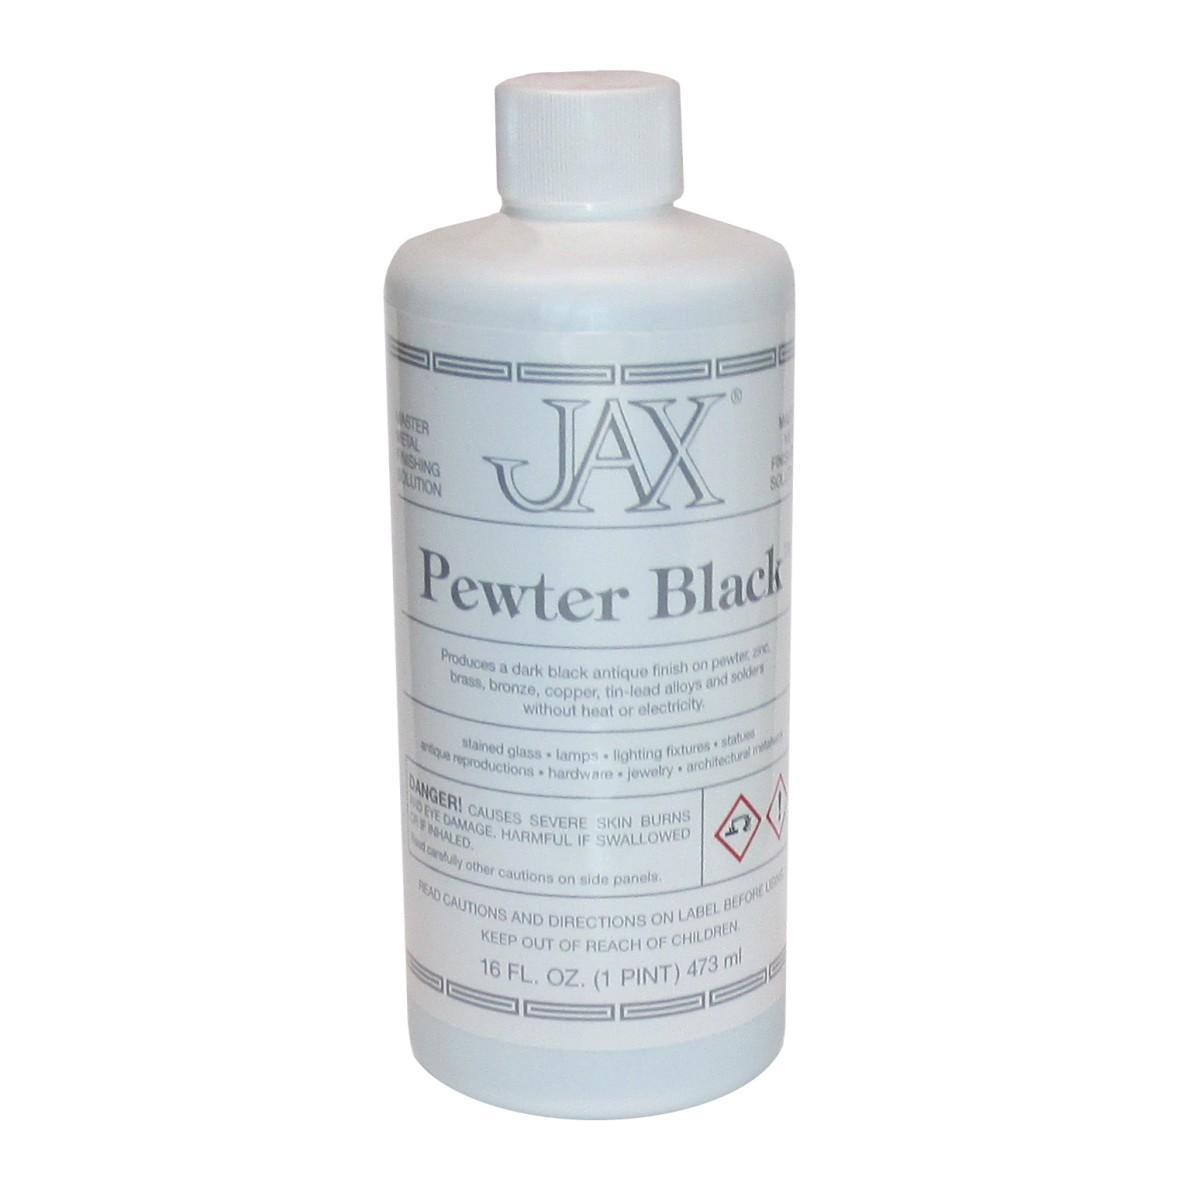 Jax Pewter Black Blackener Stained Glass Patina Tools Supplies - 16 oz.  Pint - Tony's Restaurant in Alton, IL